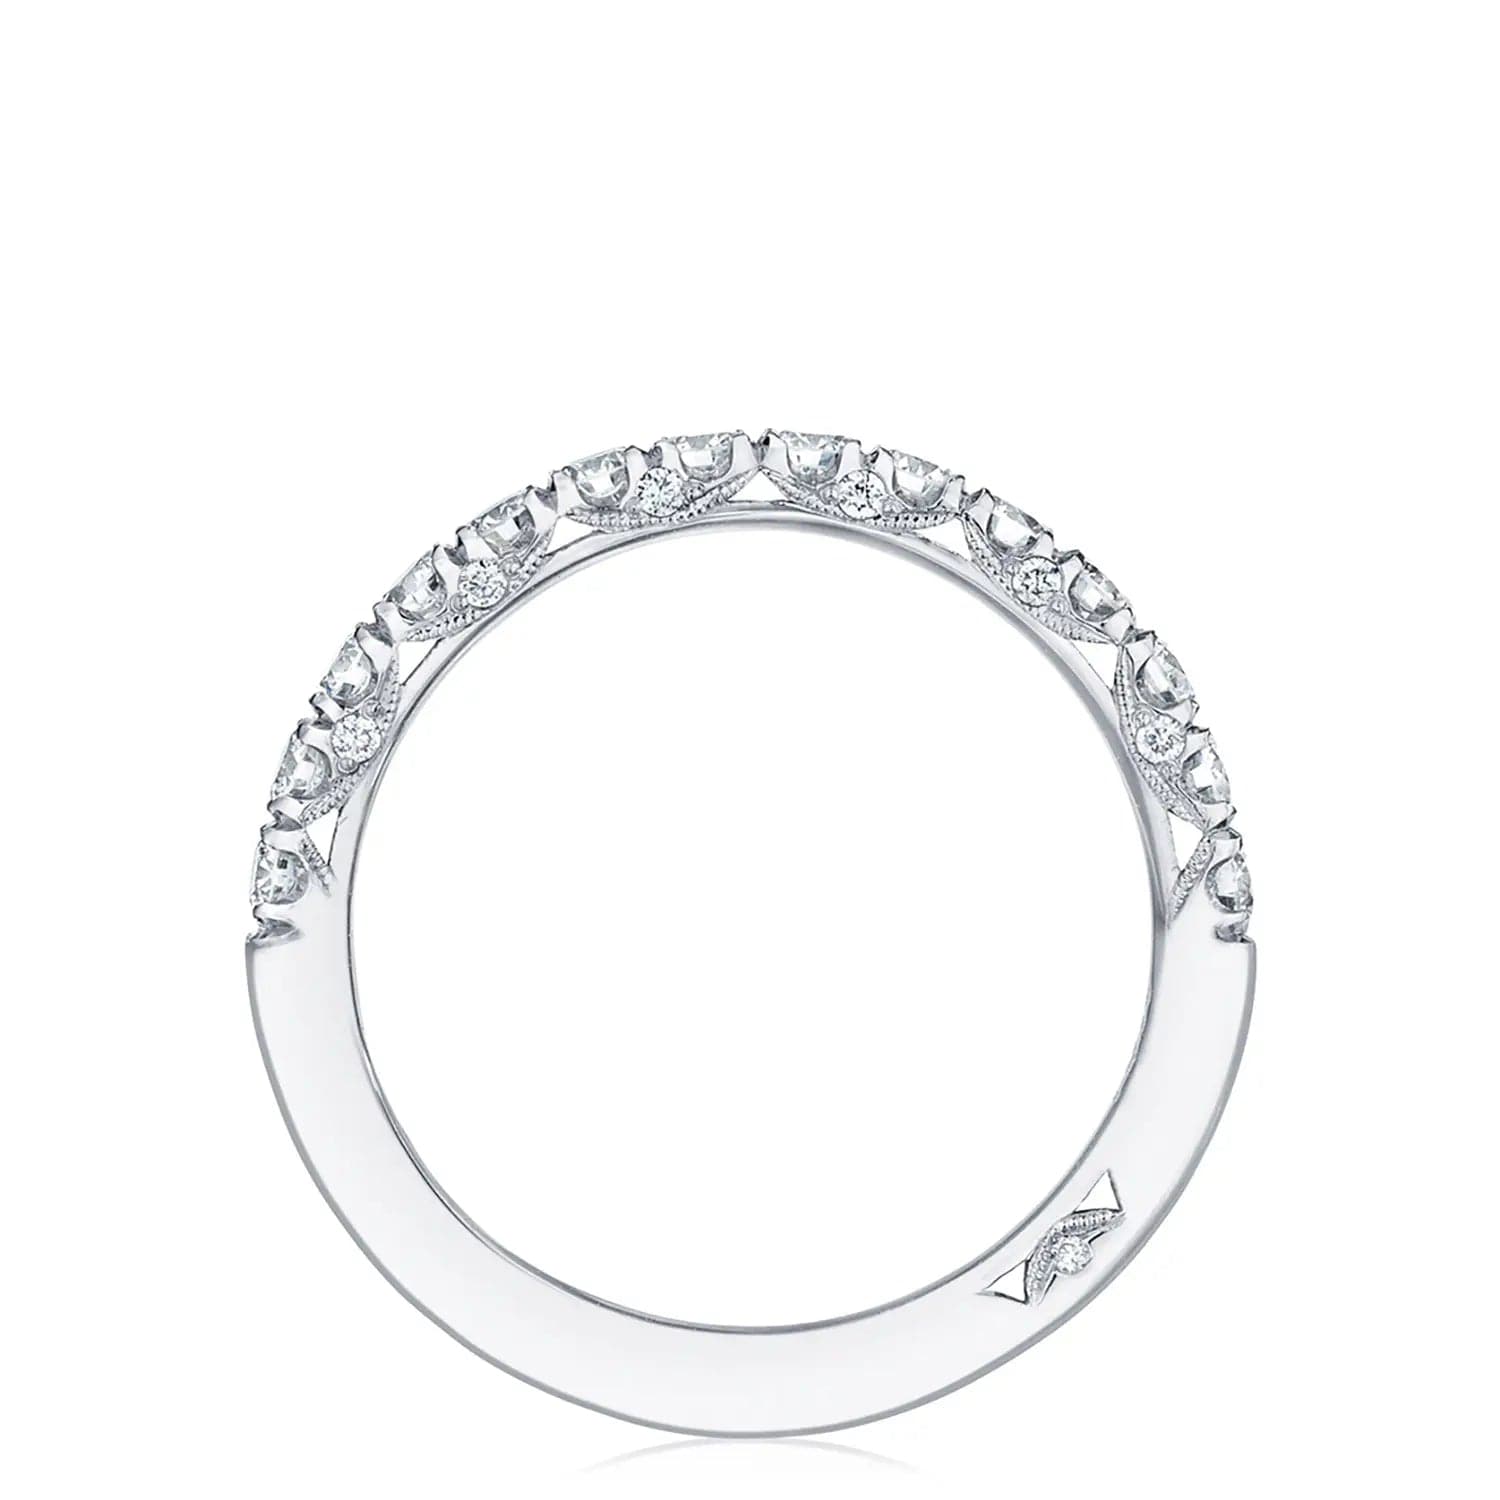 Tacori Engagement Wedding Band 18k White Gold Petite Crescent French Pave 2.5mm Diamond Band 6.5